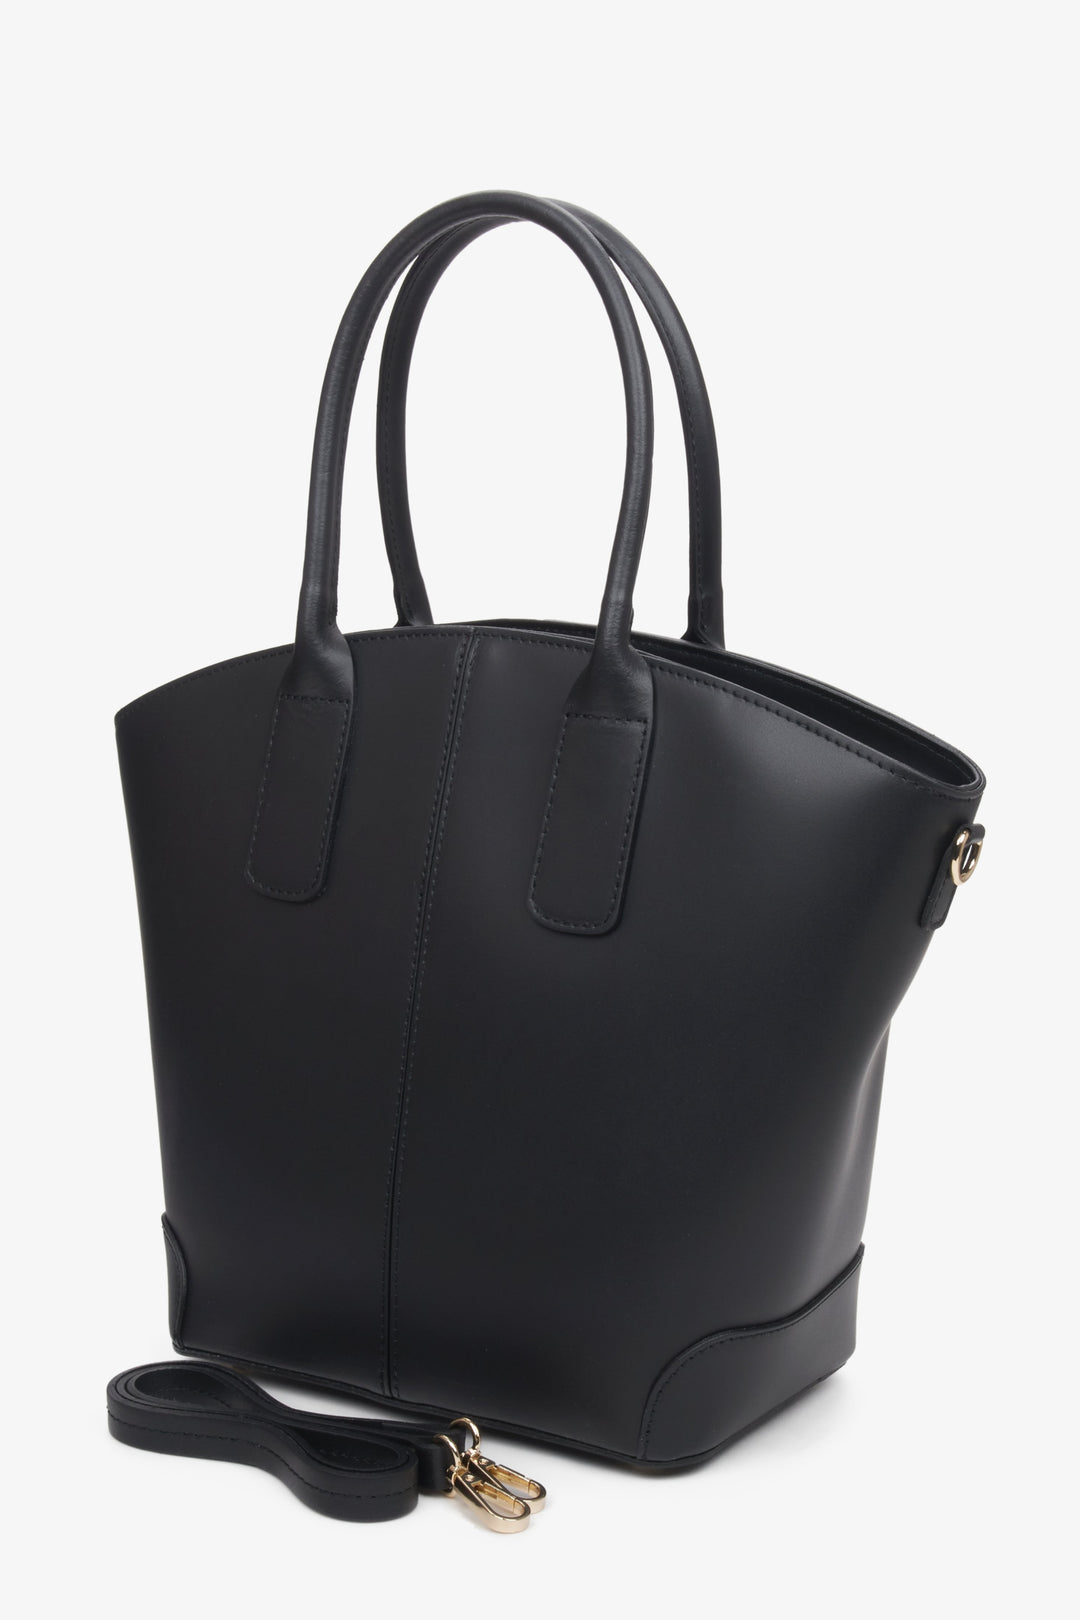 Women's black shopper bag made of genuine leather.